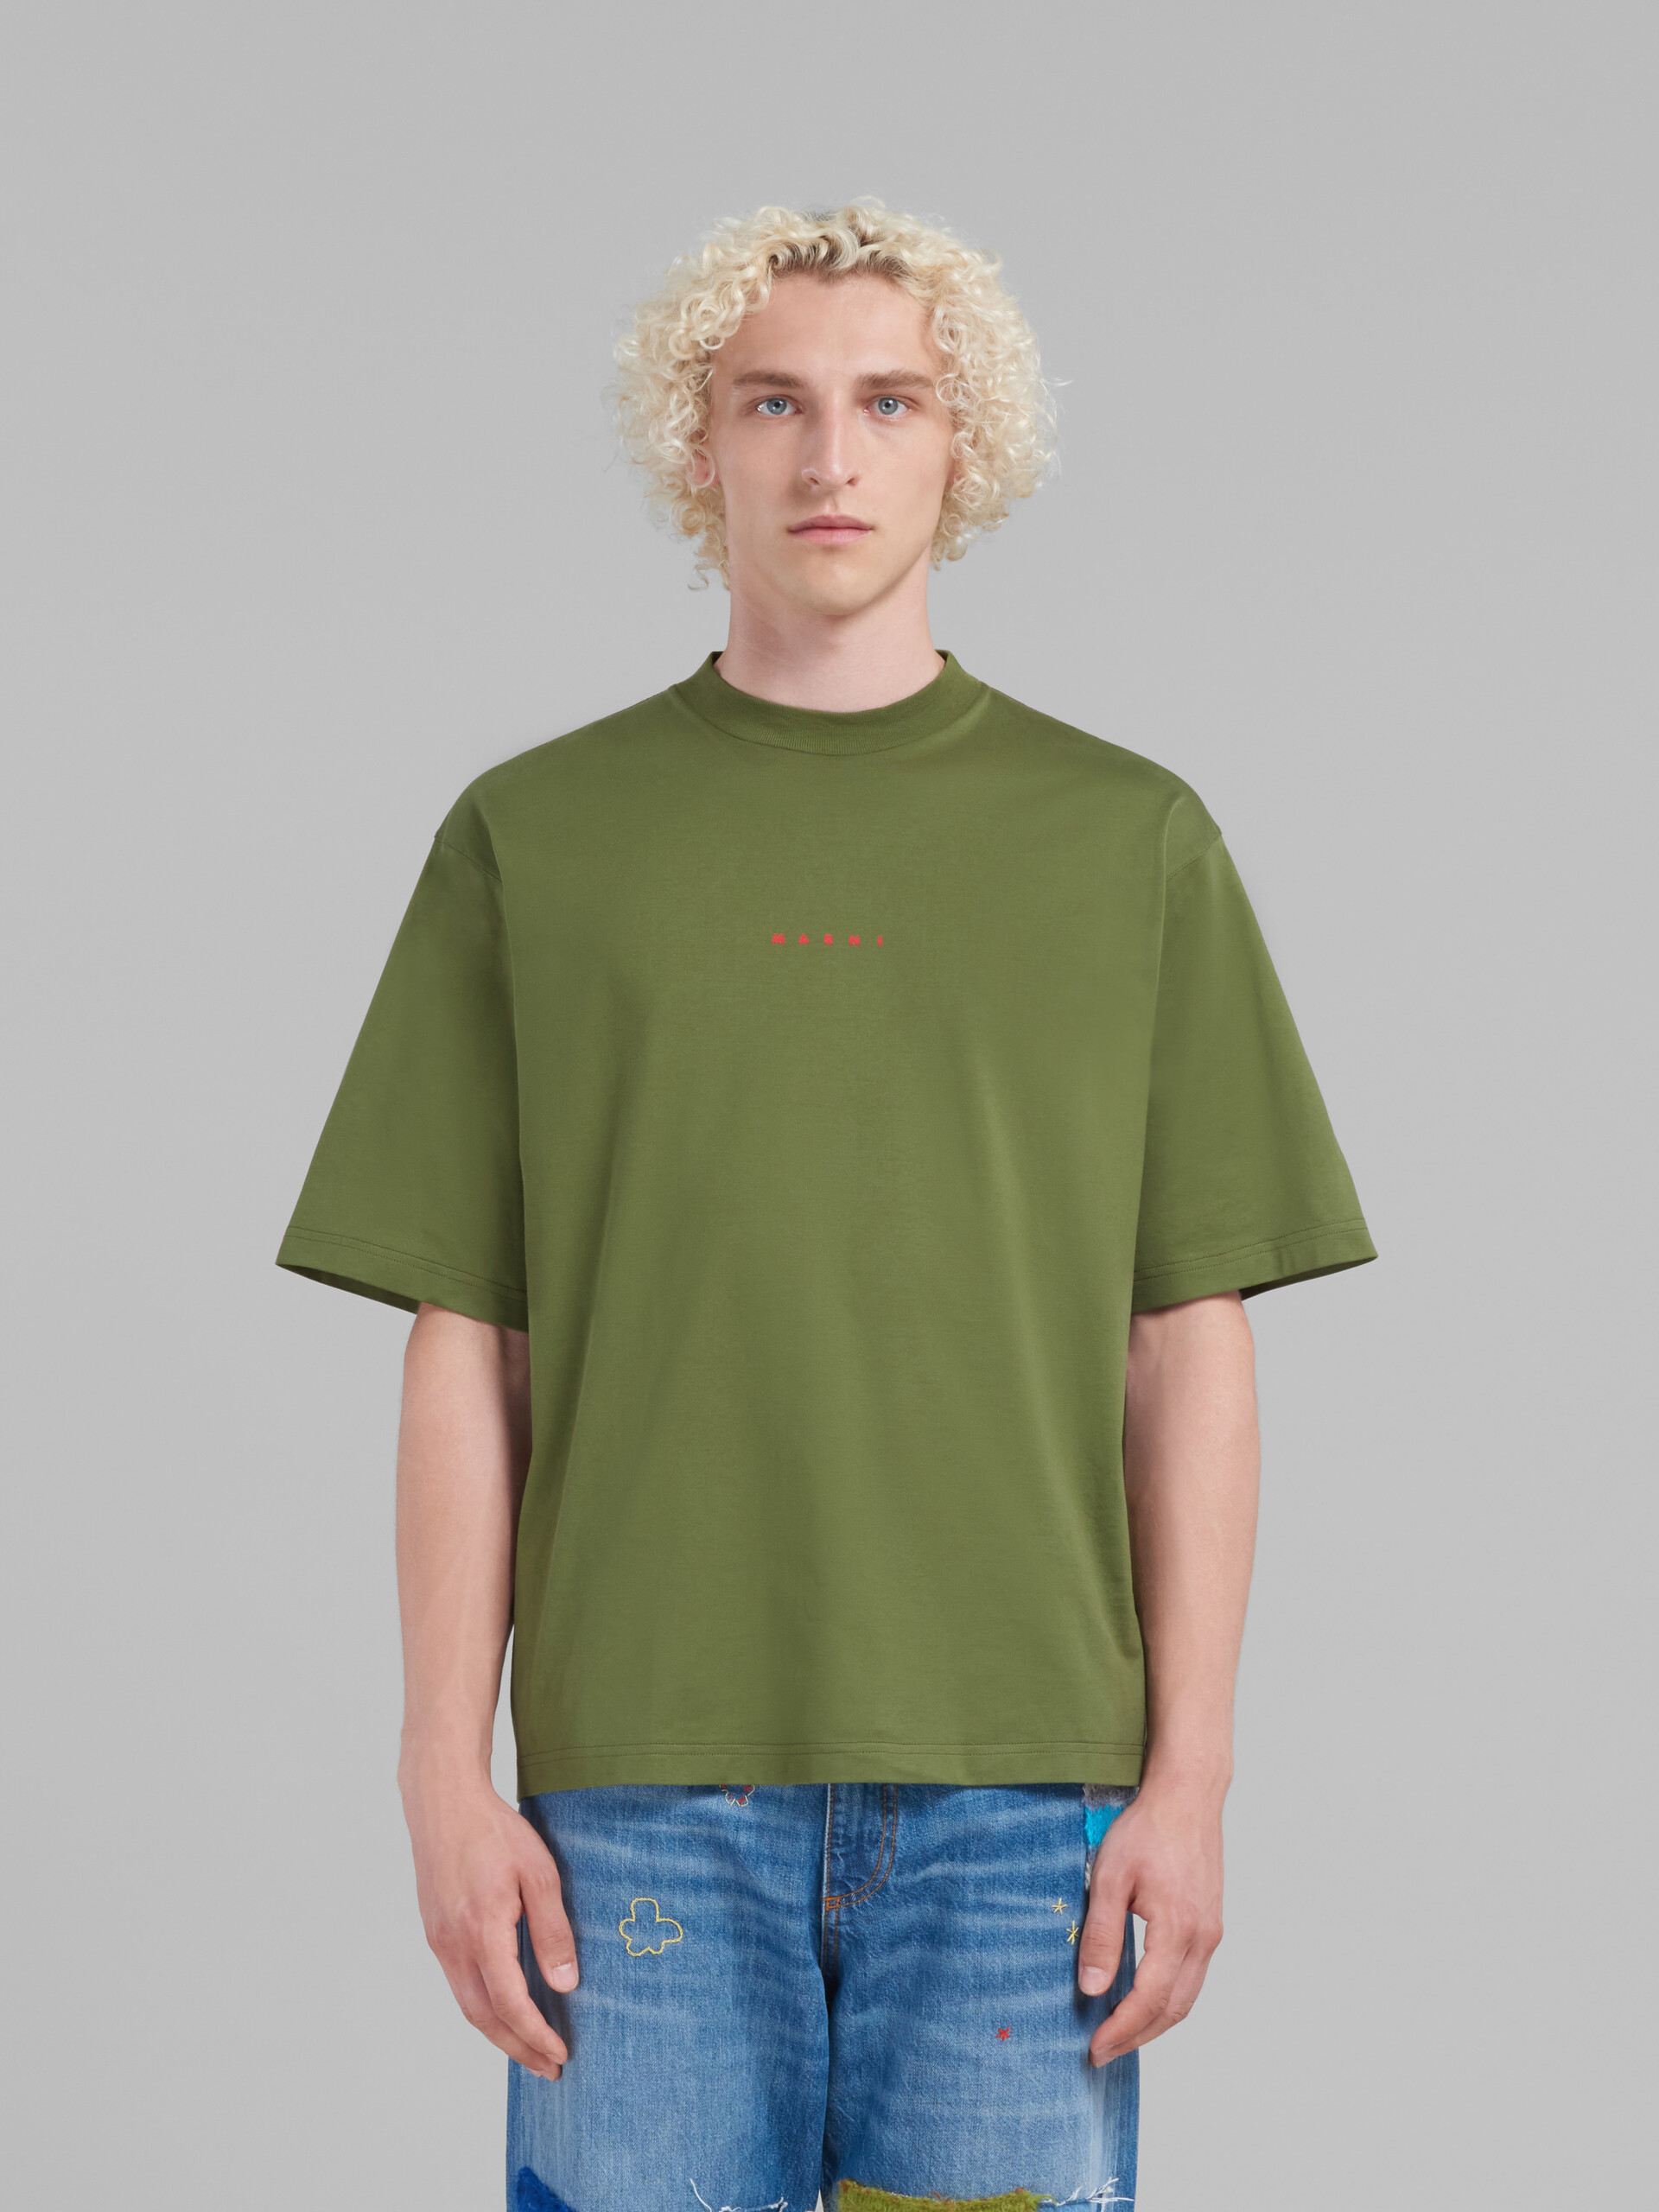 Rosafarbenes T-Shirt aus Bio-Baumwolle mit Logo - T-shirts - Image 2